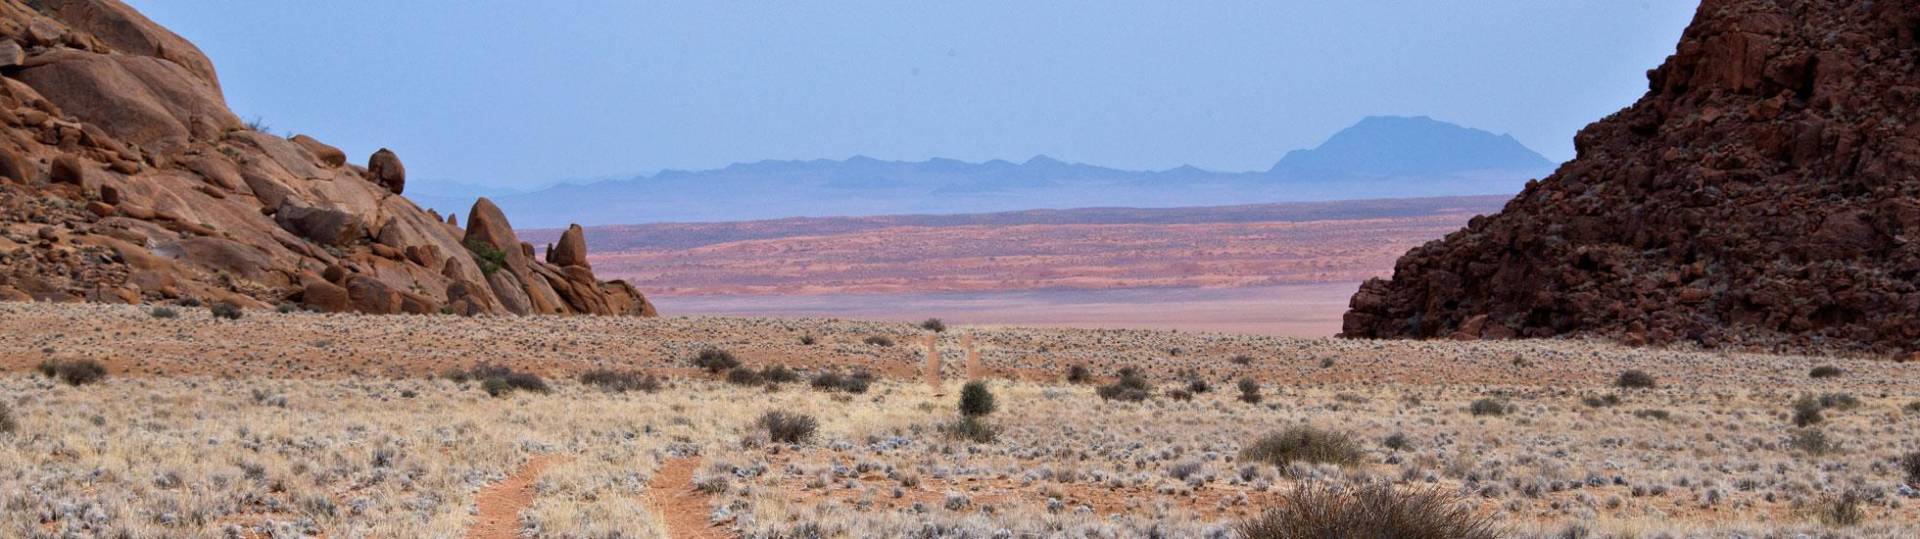 Southern Namibian landscapes